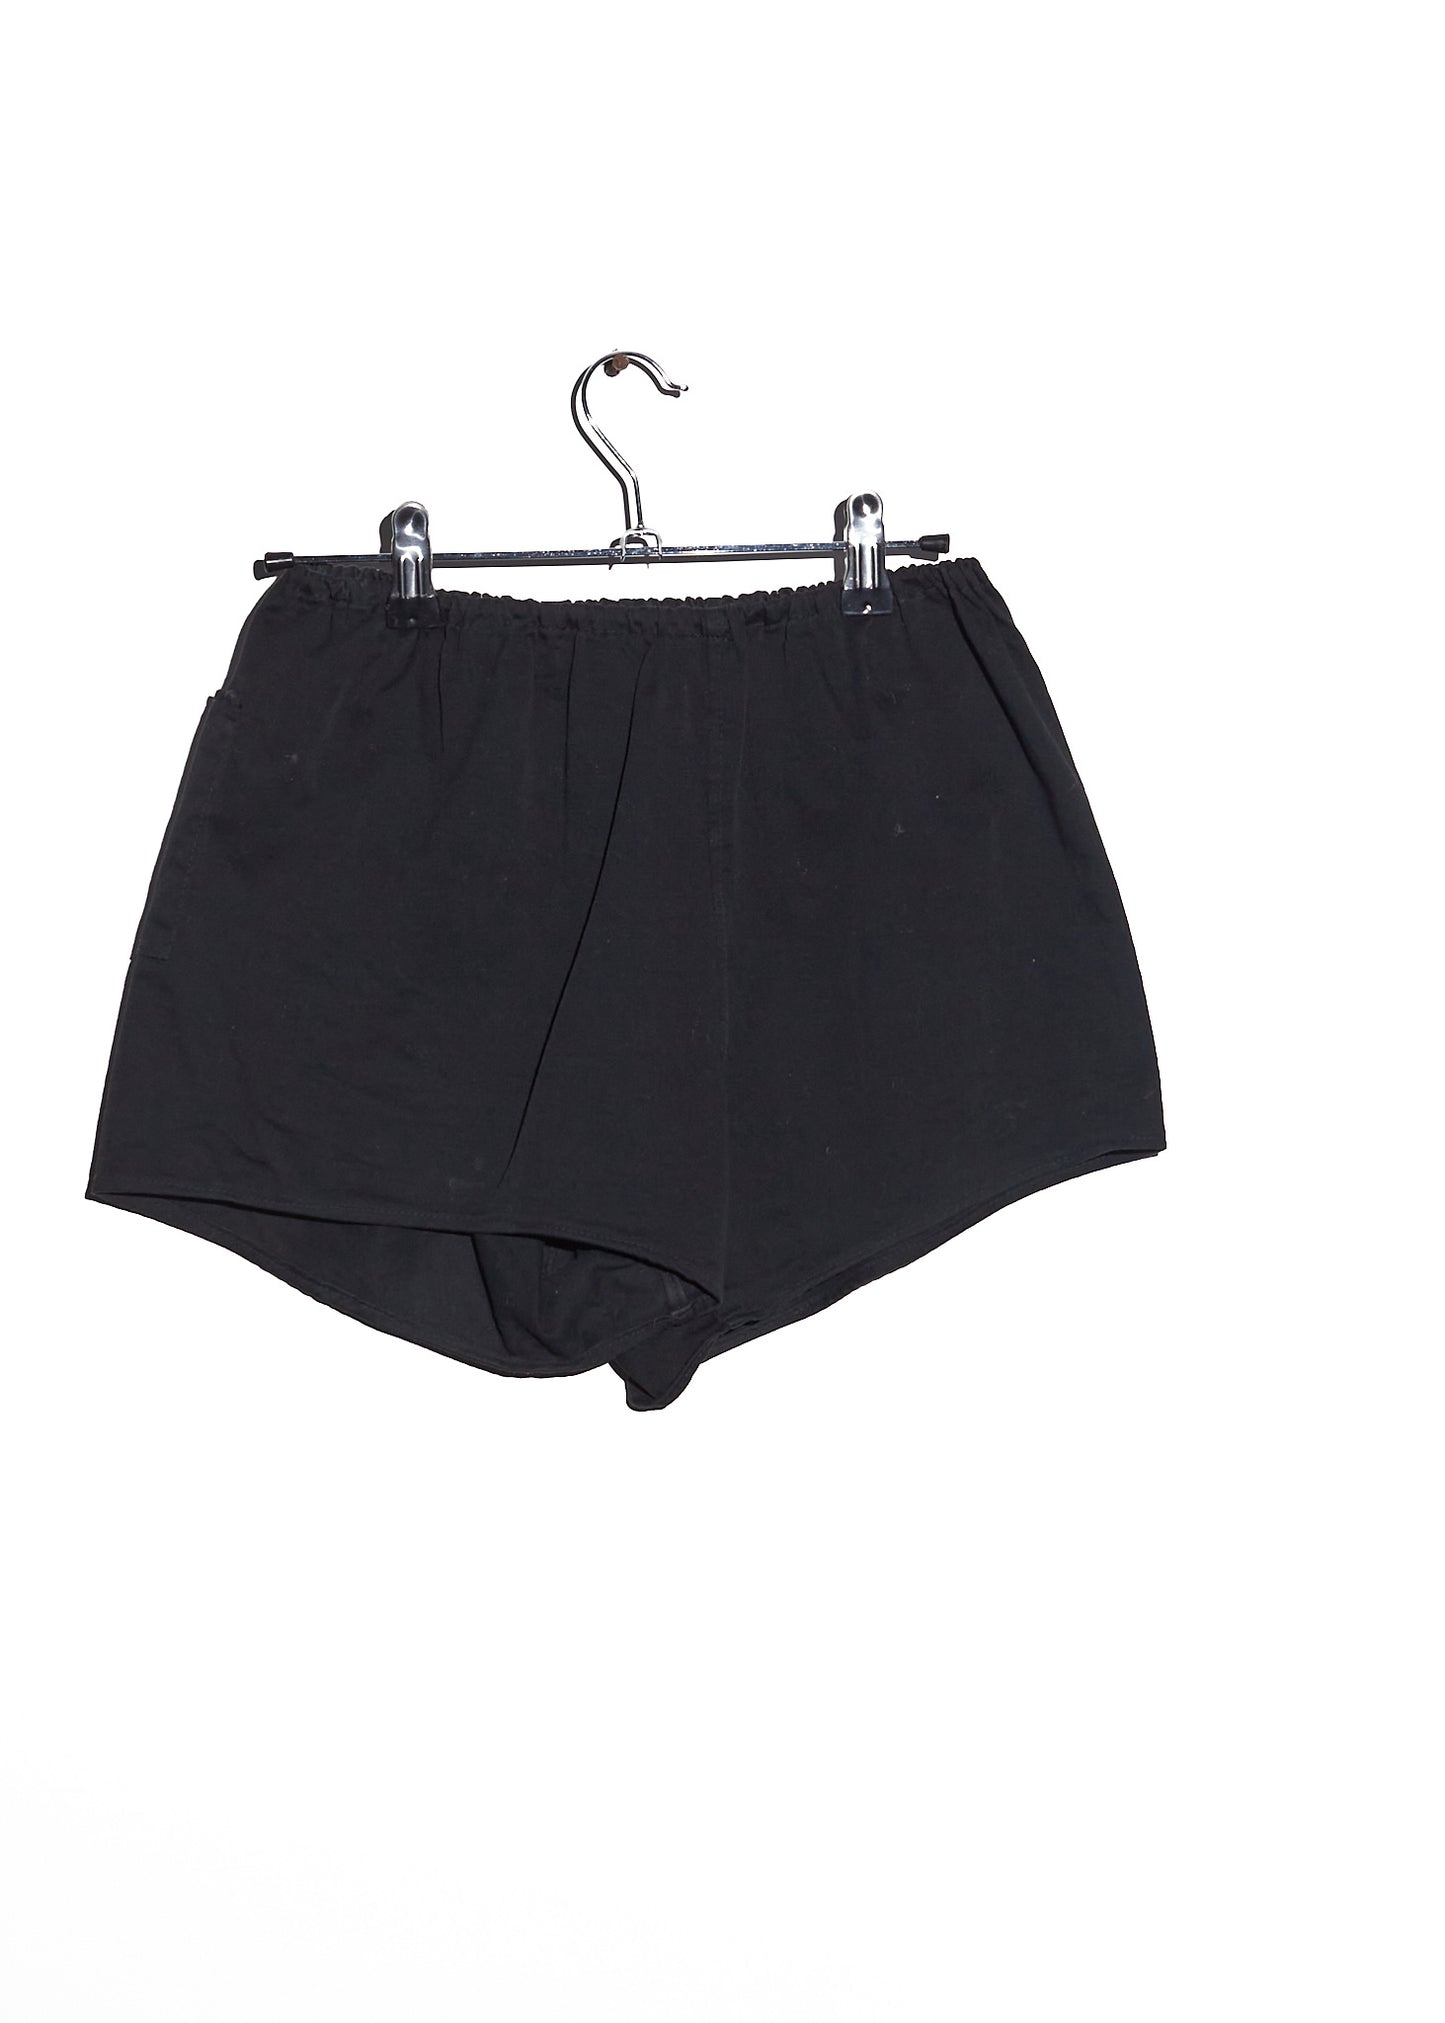 Black Cotton Shorts